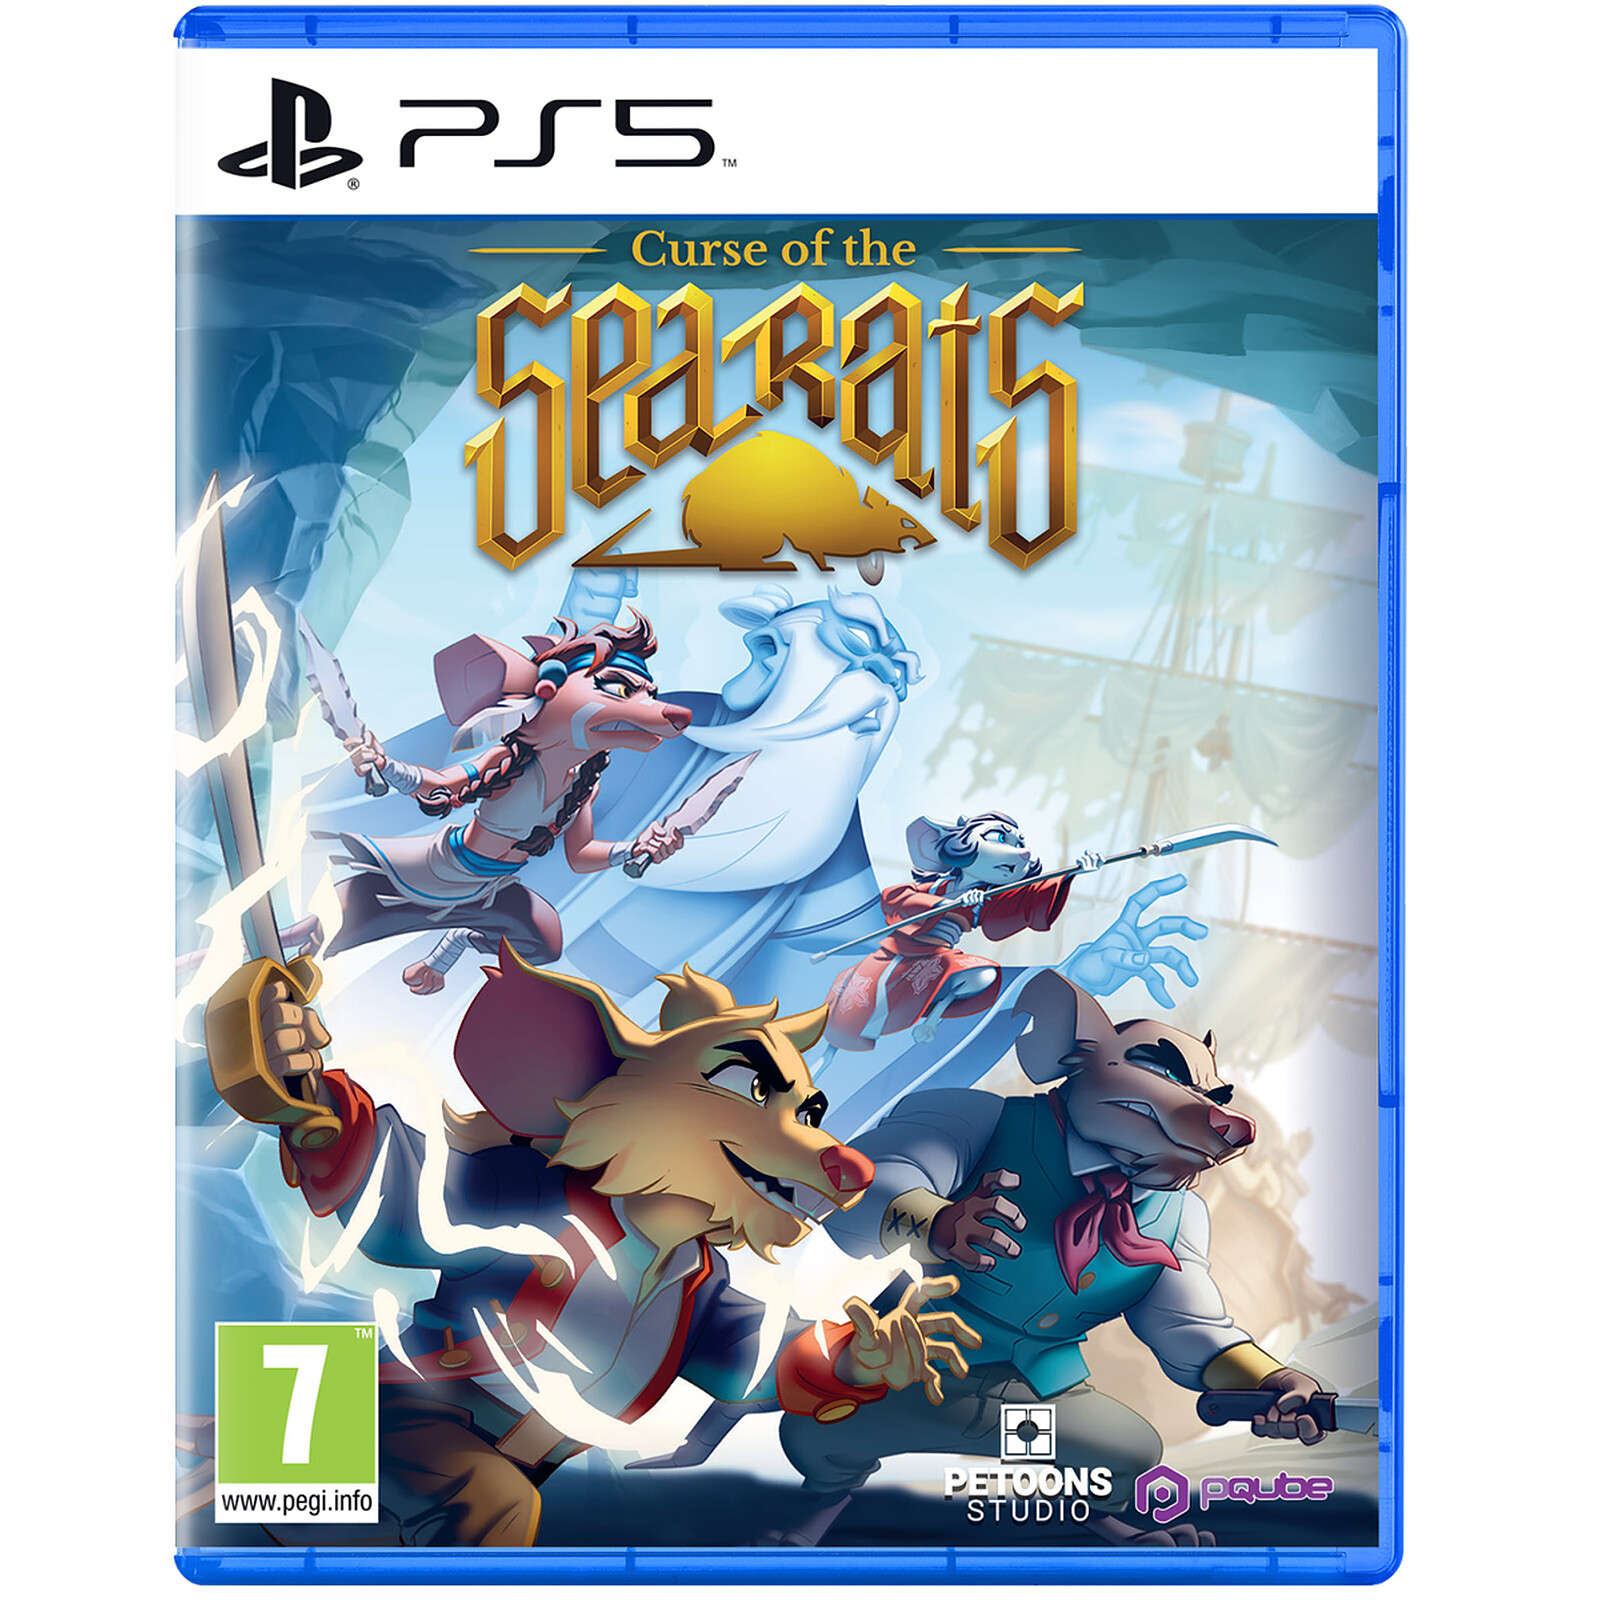 Kena Bridge of Spirits Deluxe Edition (PS4) - Jeux PS4 - LDLC